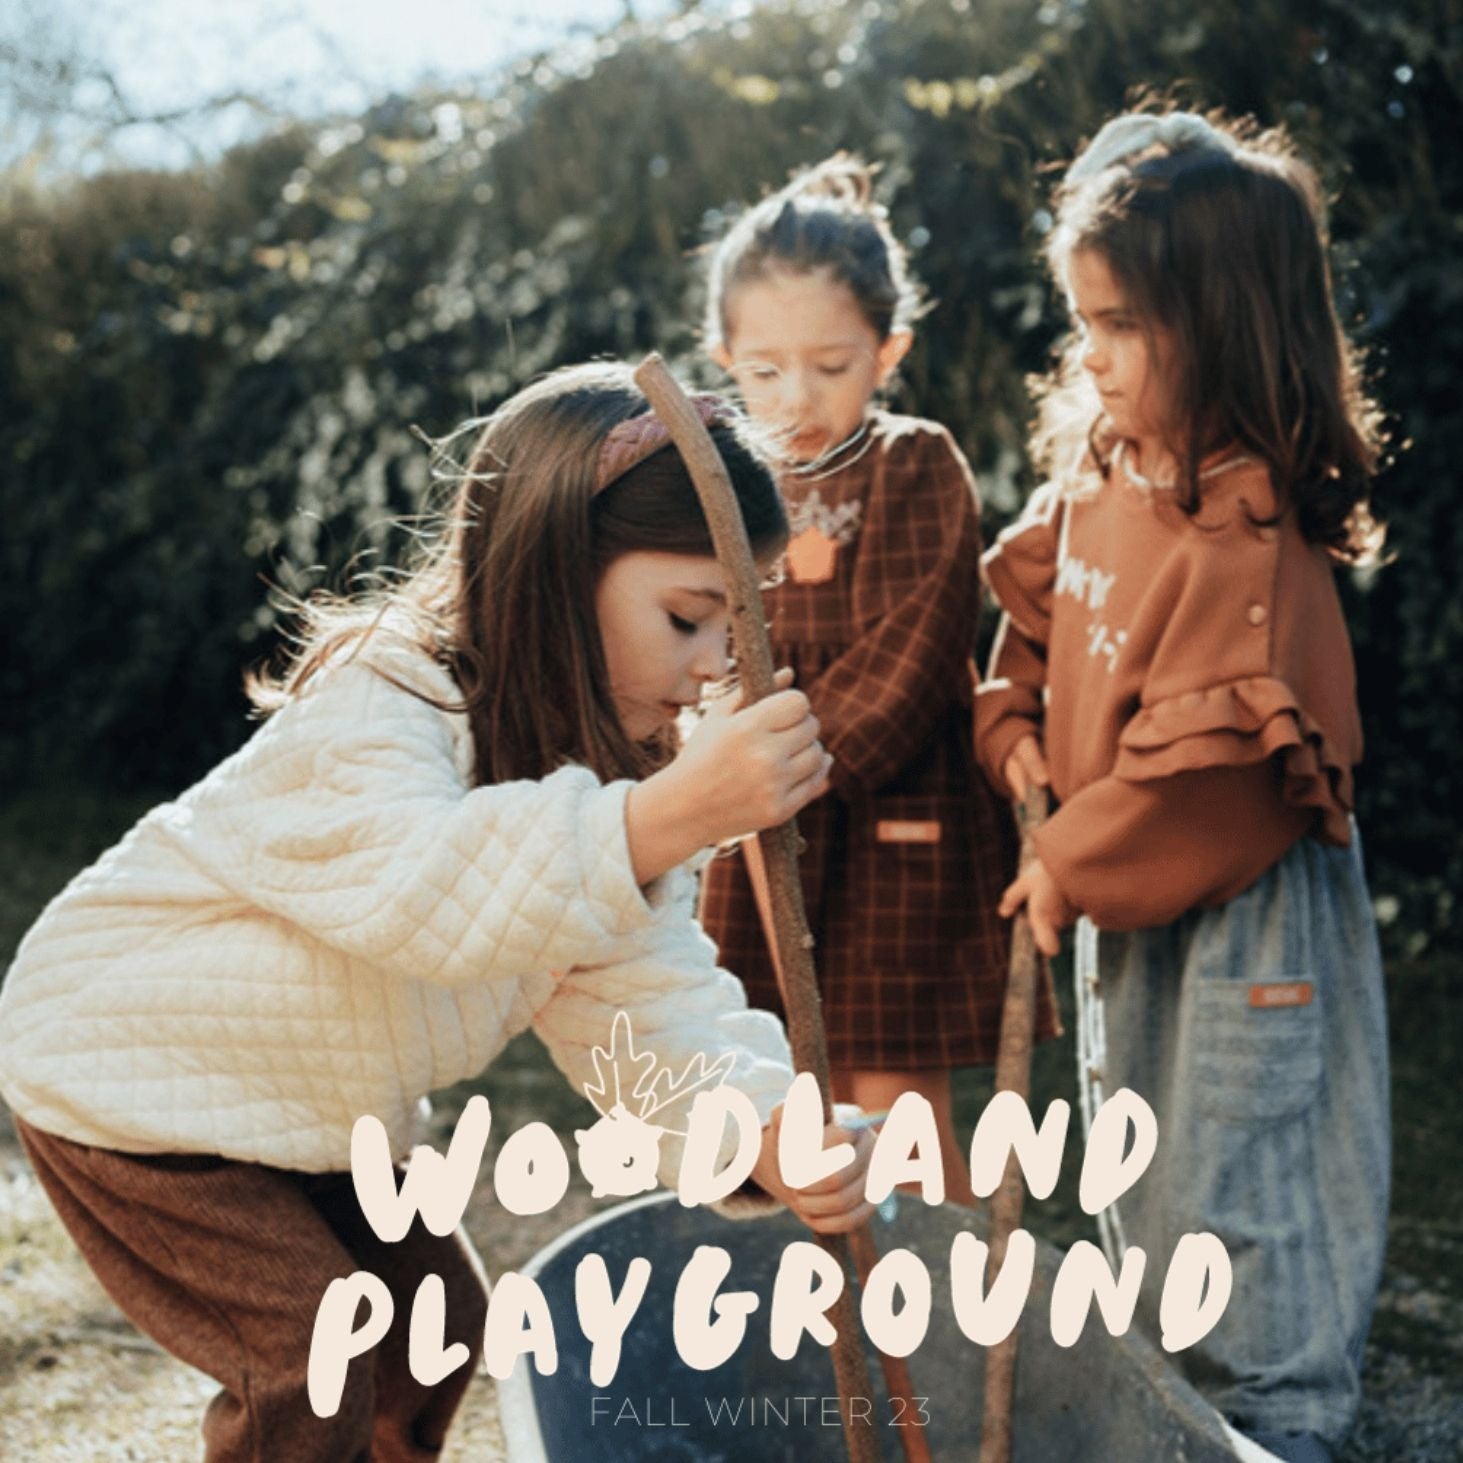 "Woodland Playground"